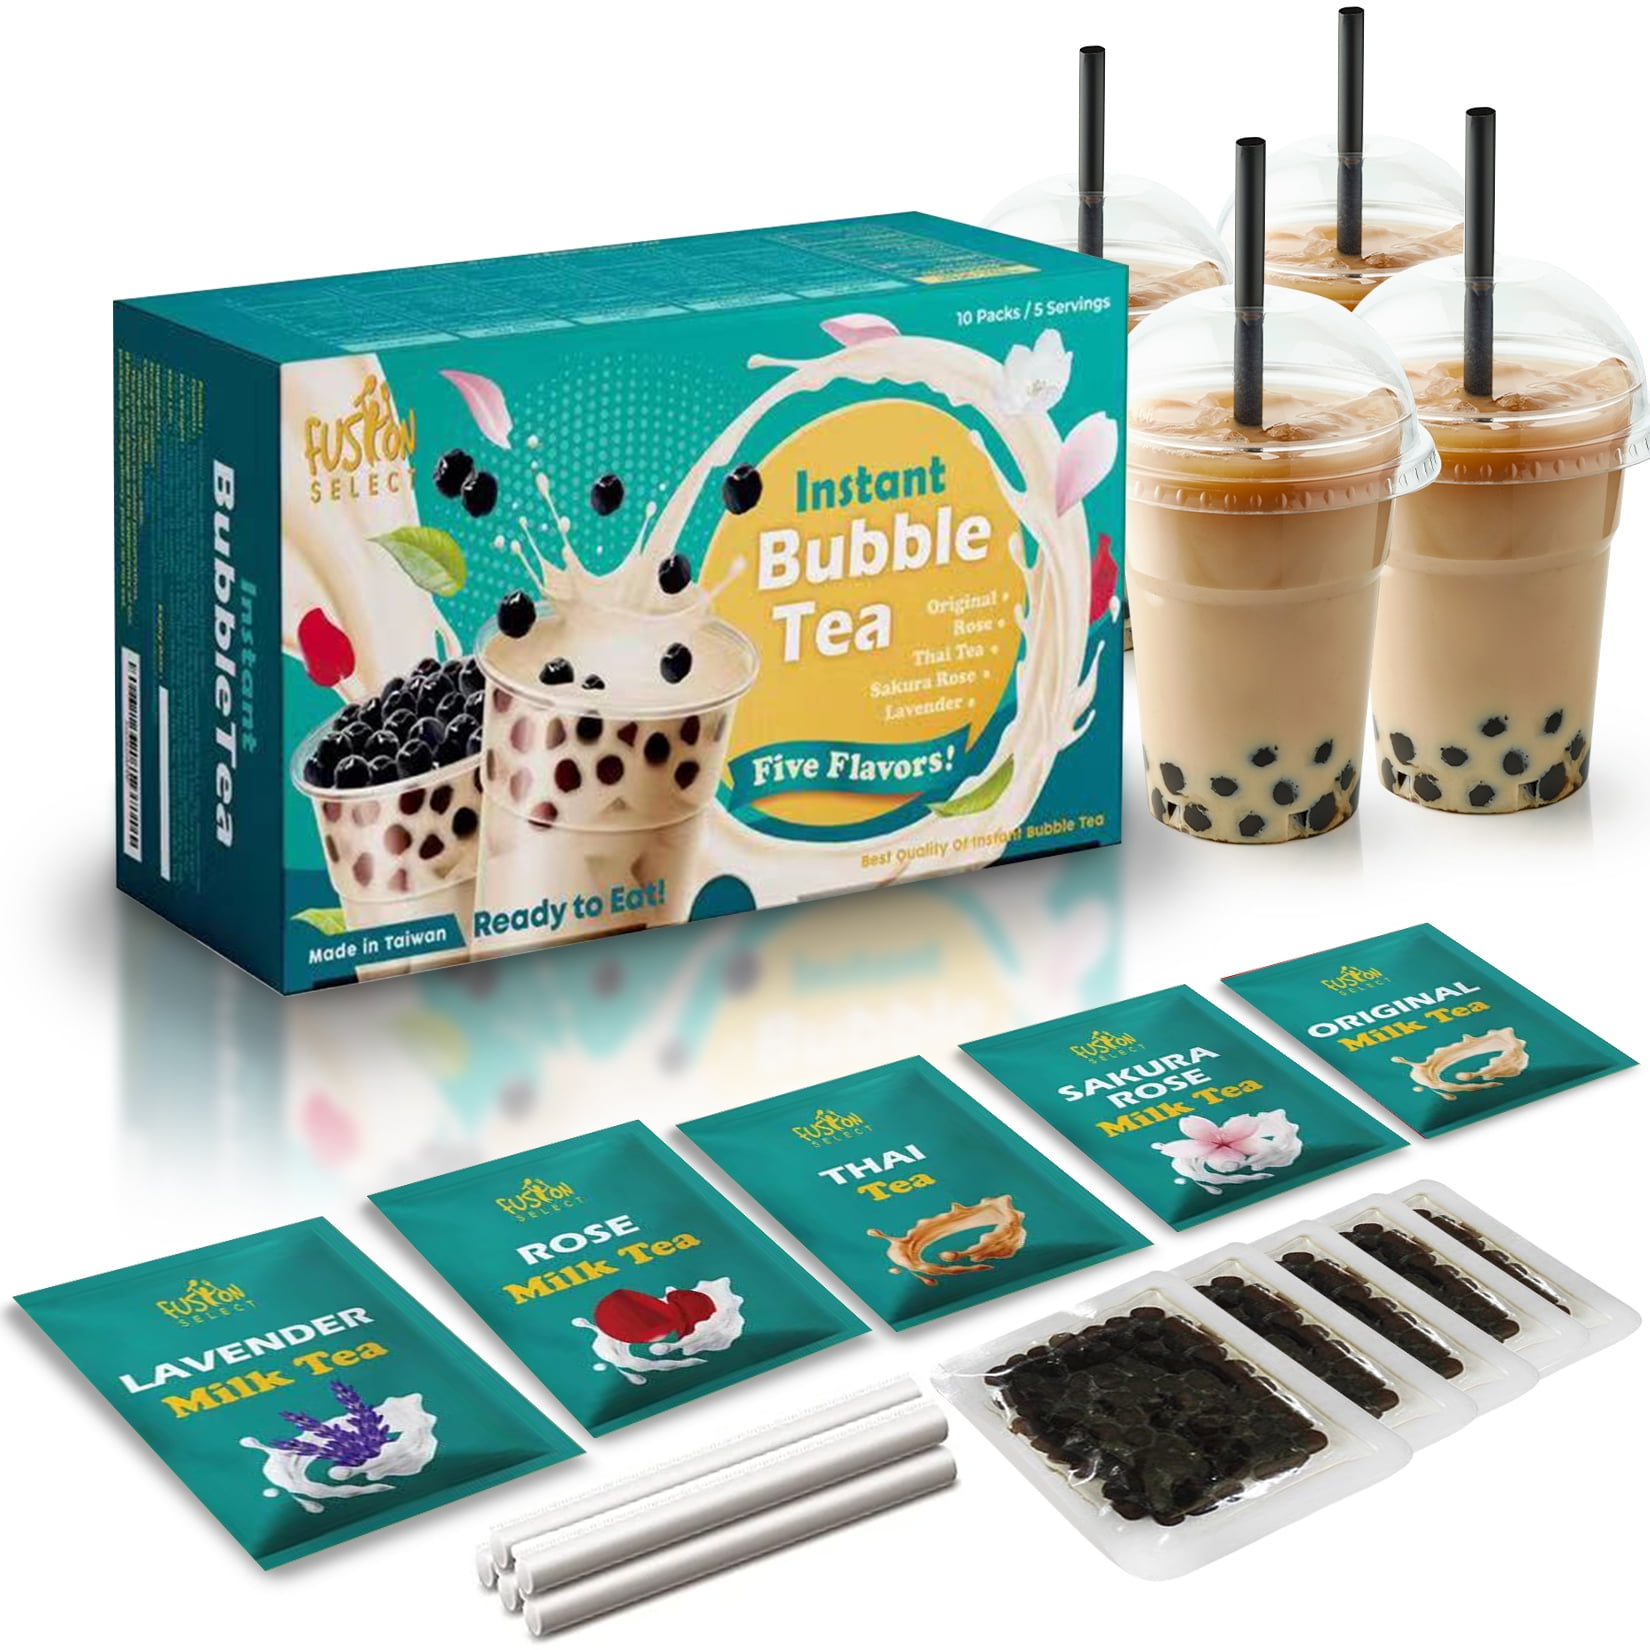 Fusion Select Authentic Bubble Tea Kit (5 Bubble Tea Boba Pearl Straws Most Popular Bubble Tea Flavors Milk Tea Rose Sakura Rose and Thai Tea - Walmart.com